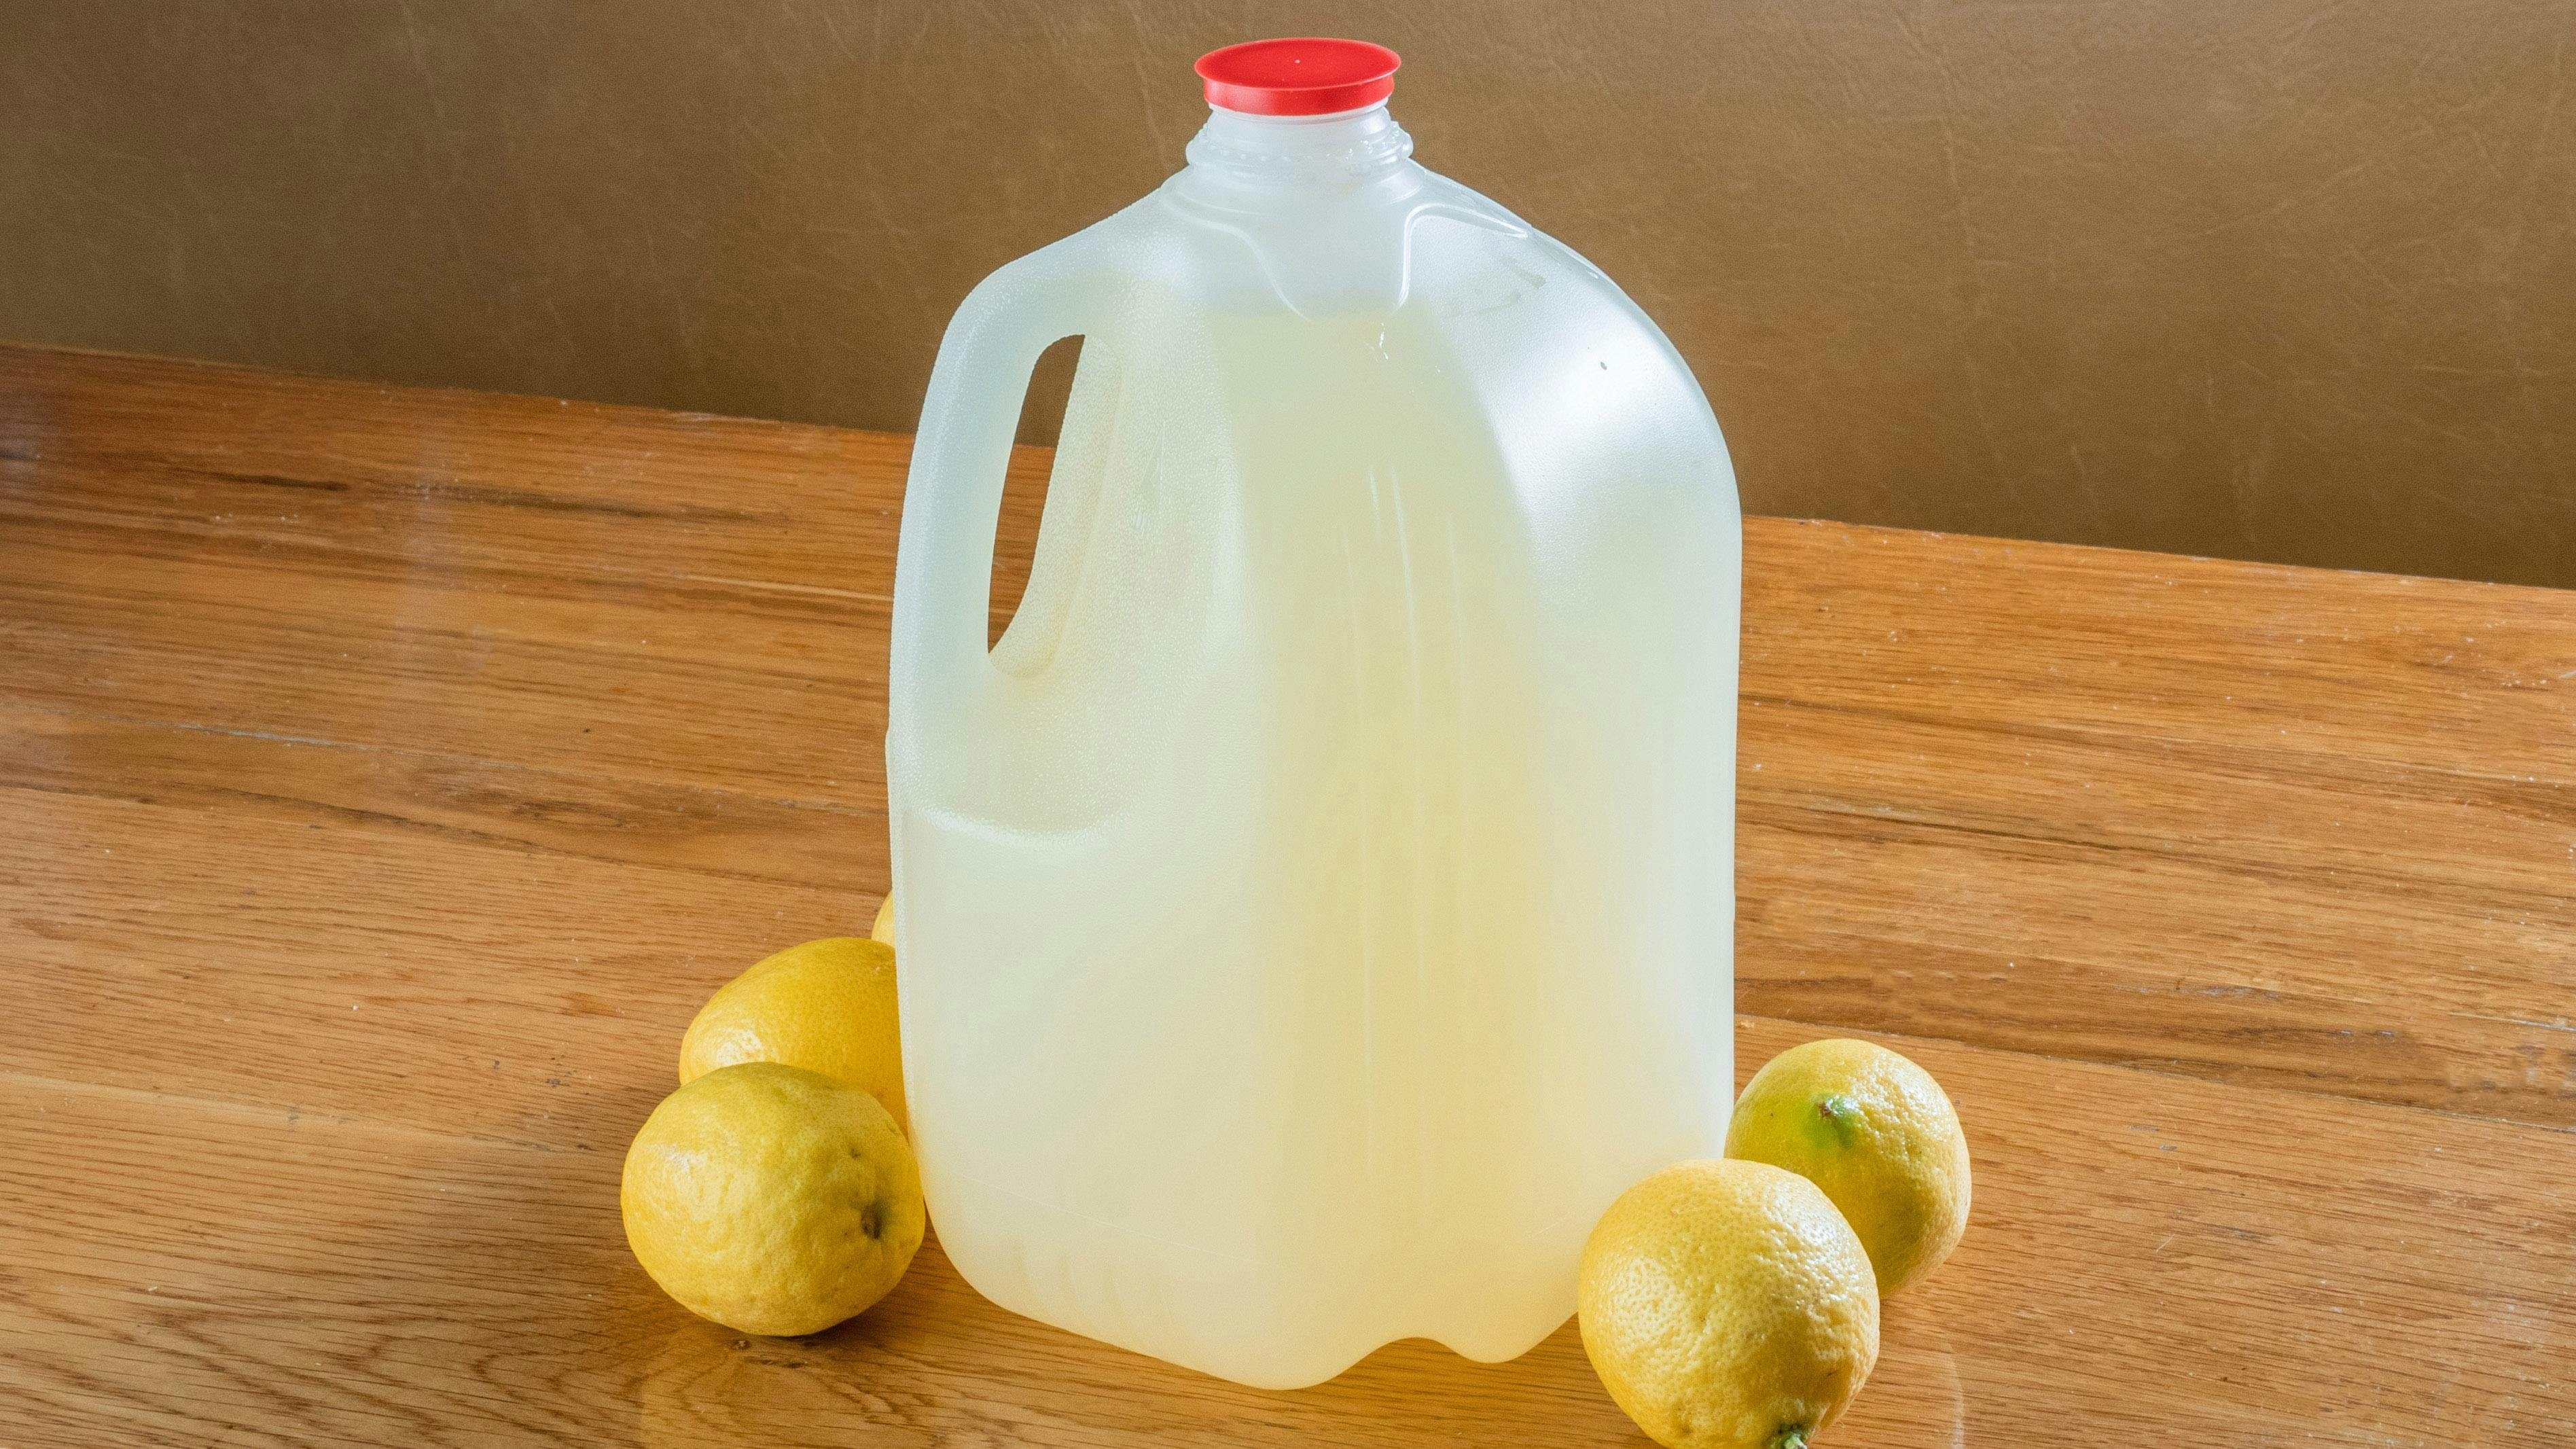 Gallon Lemonade from Happy Chicks - East 6th St in Austin, TX